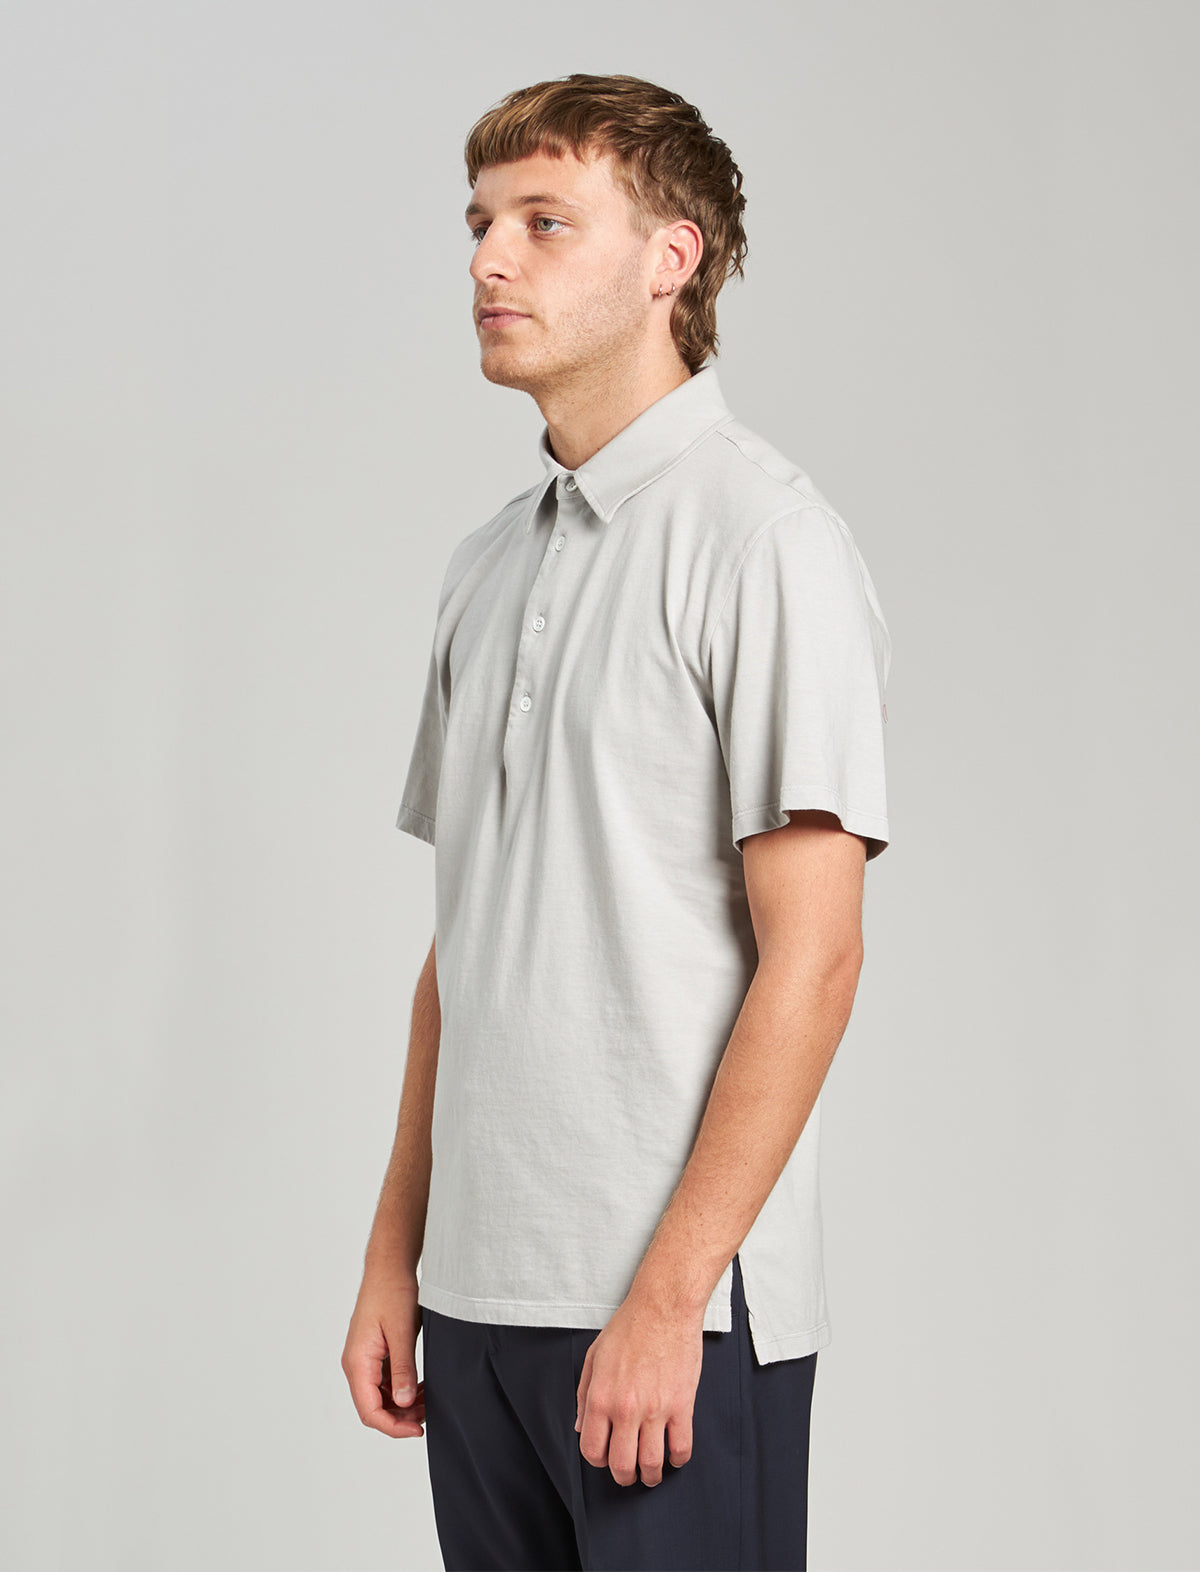 BARENA VENEZIA Cotton Jersey Polo Shirt in Light Grey